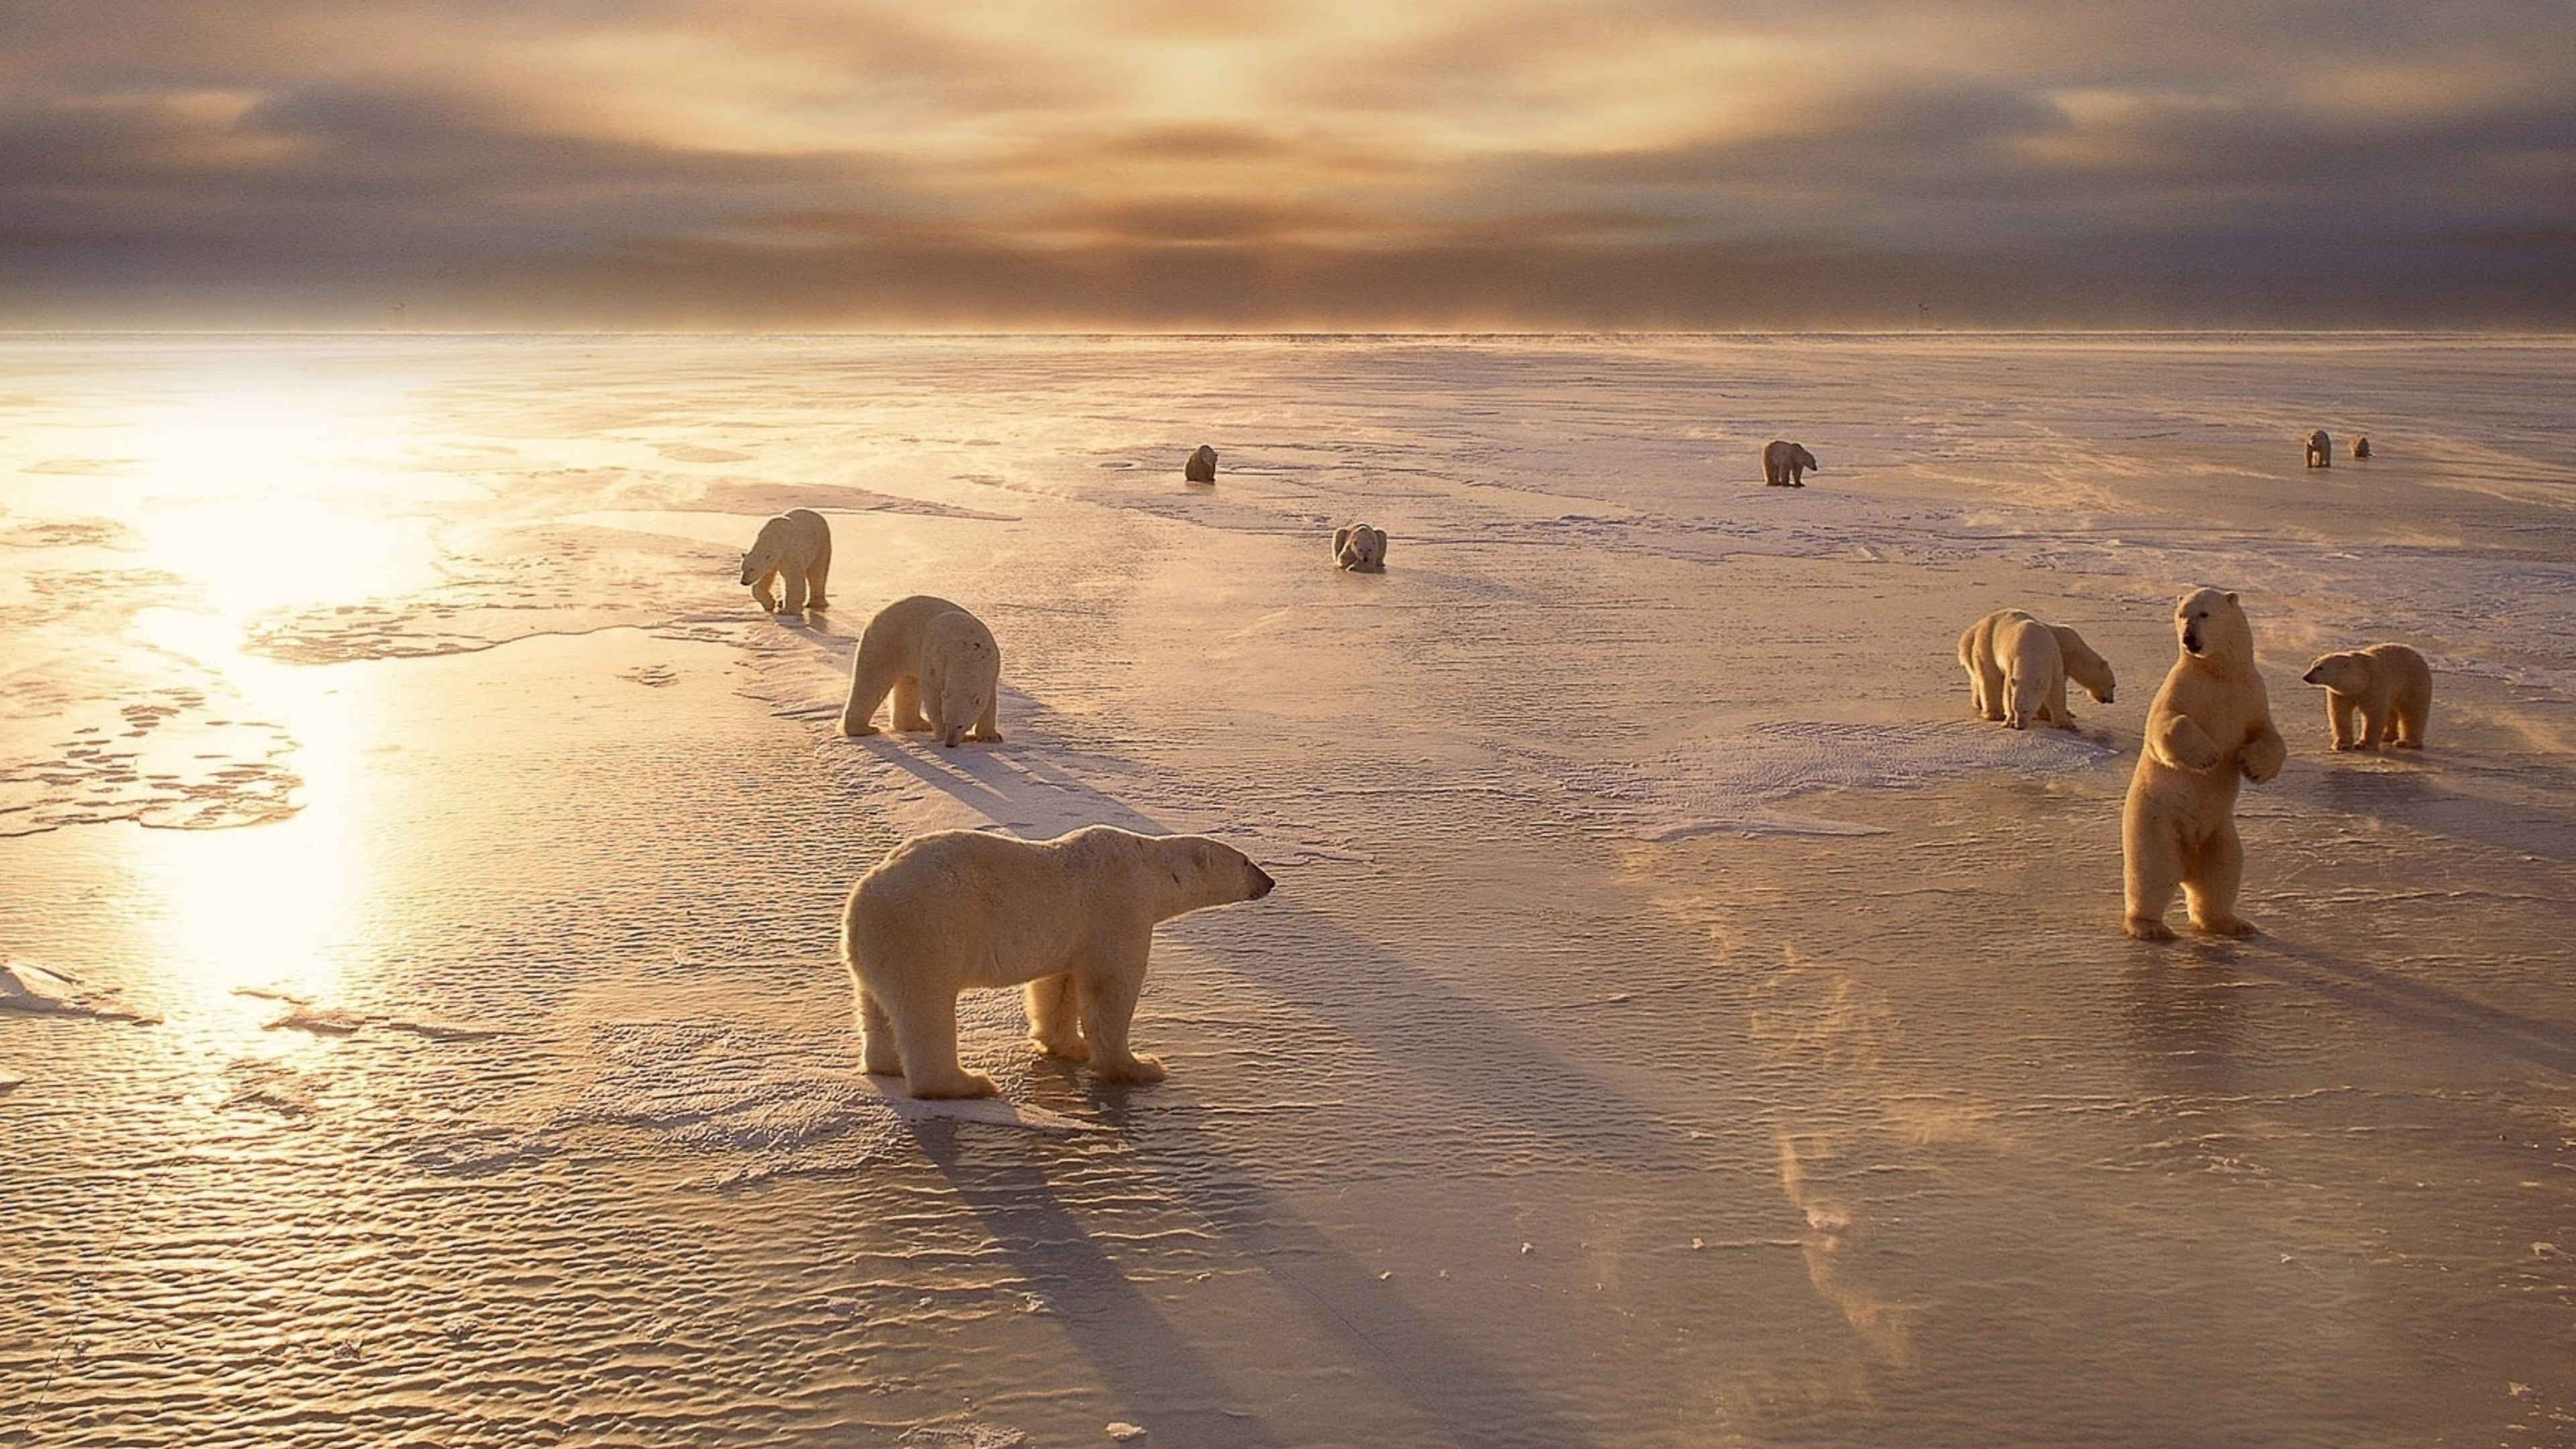 White Polar Bear on Brown Sand During Daytime. Wallpaper in 3840x2160 Resolution